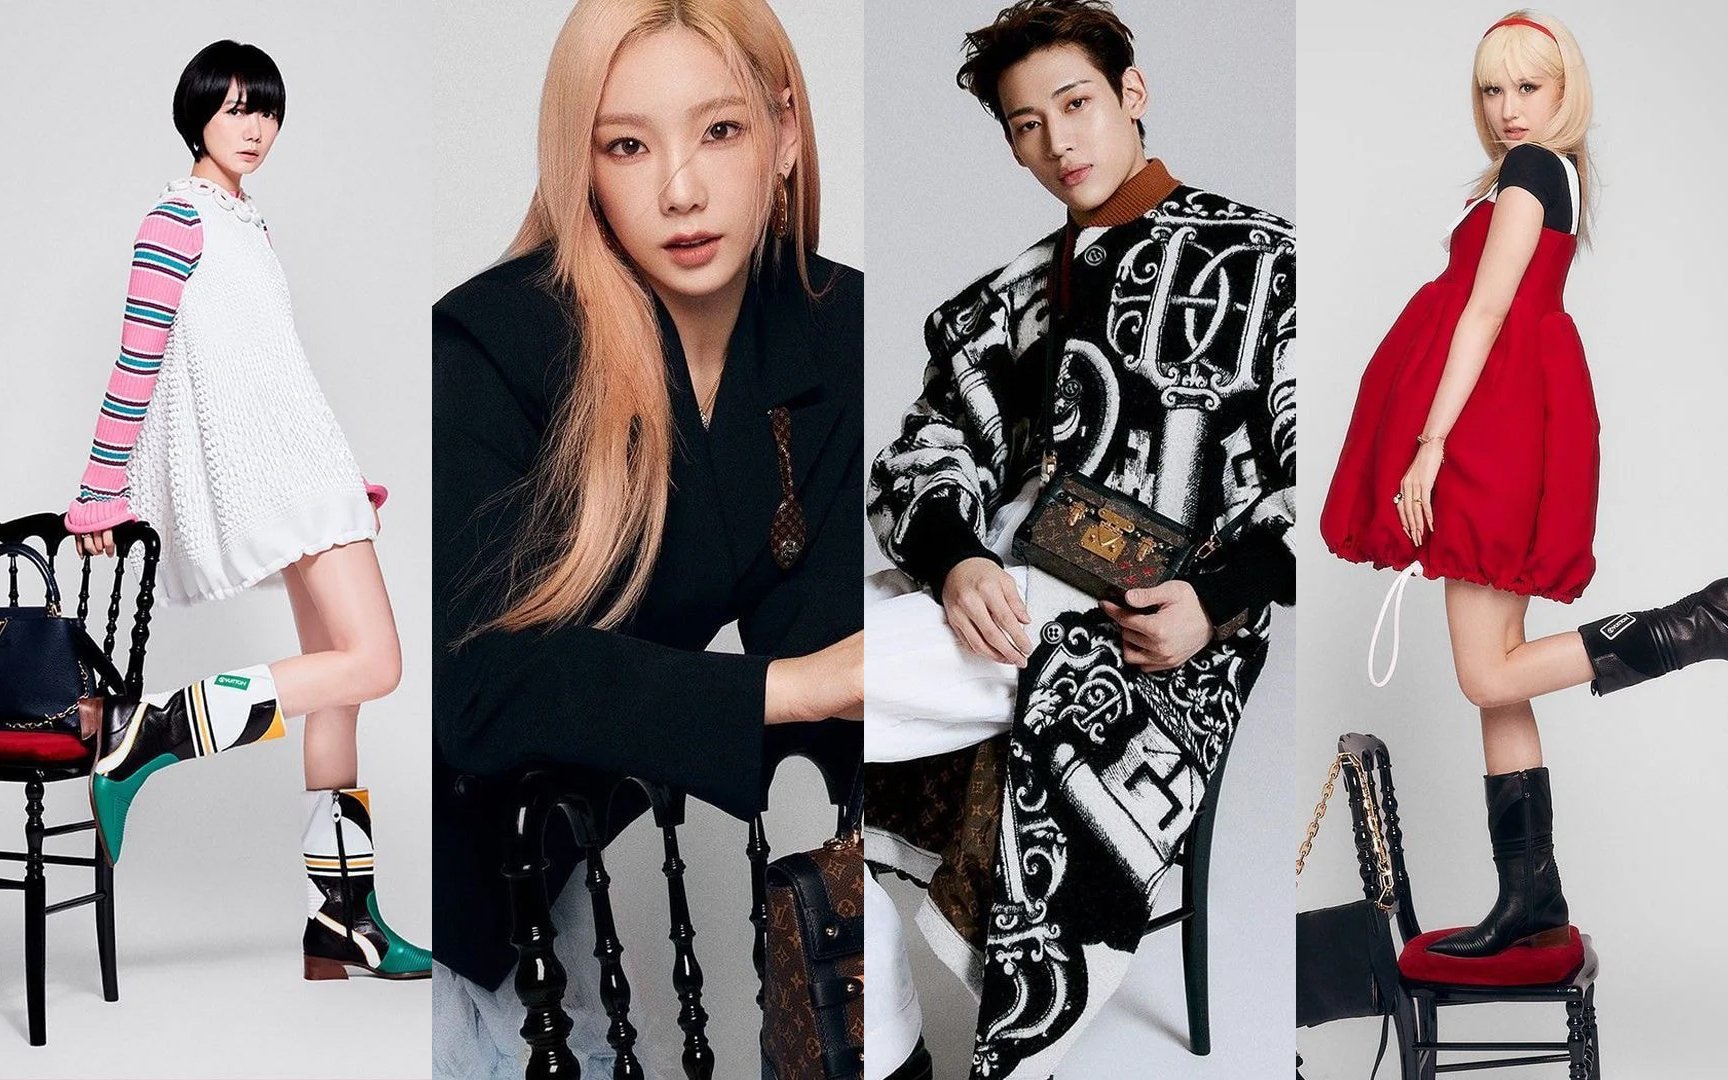 Louis Vuitton unveils photos Bae Doo Na, Jeon So Mi, BamBam, Taeyeon, and Jung Hoyeon | allkpop